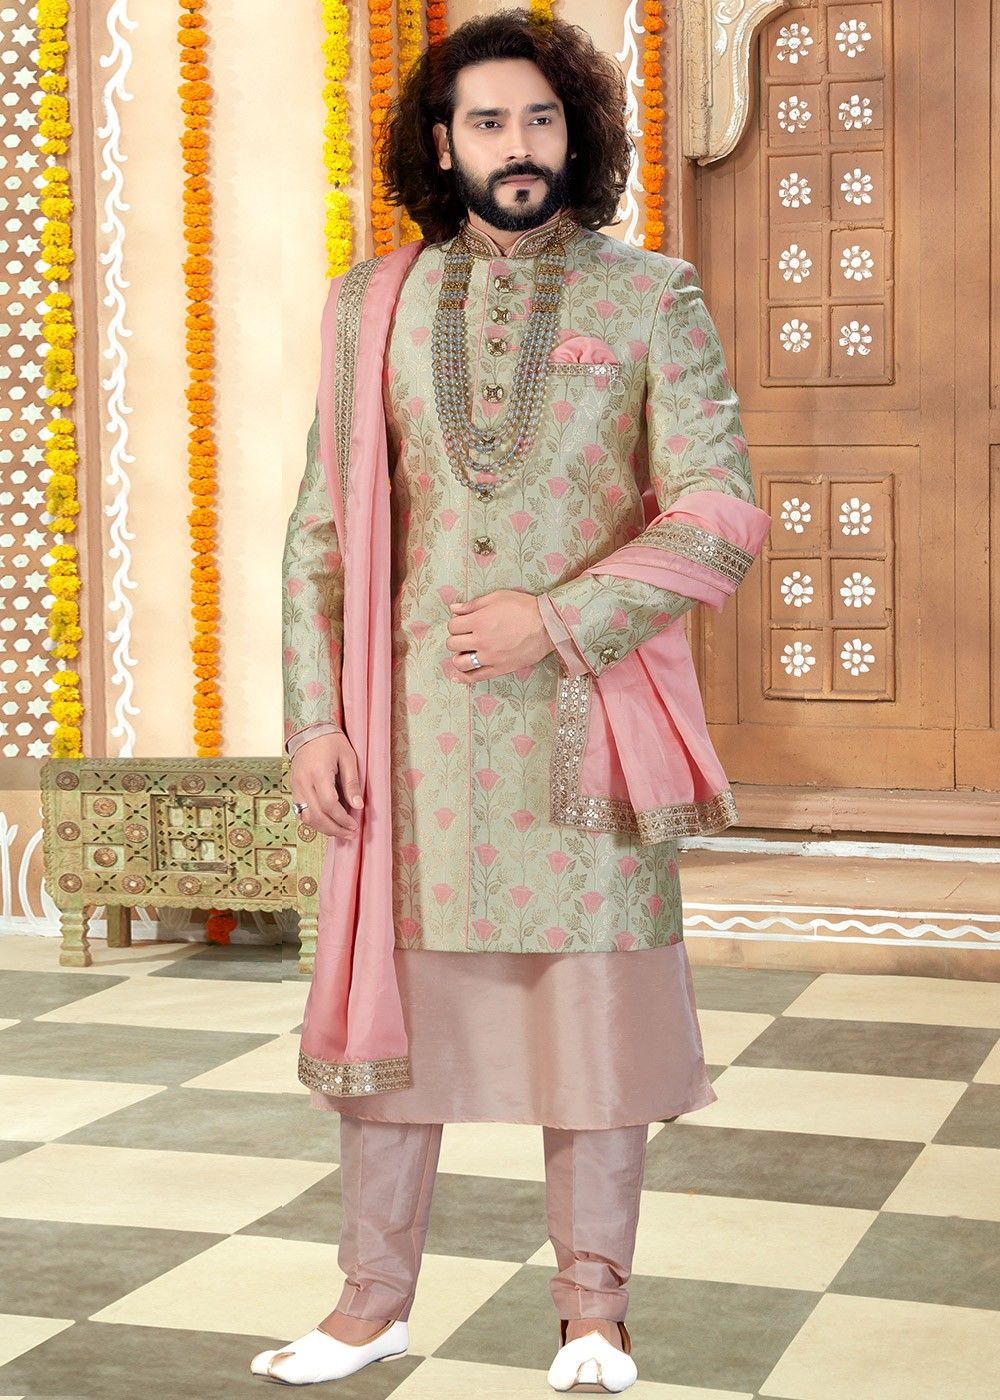 Mens Traditional Wedding Party Wear Designer Boys Indo Western Dress From  India | eBay